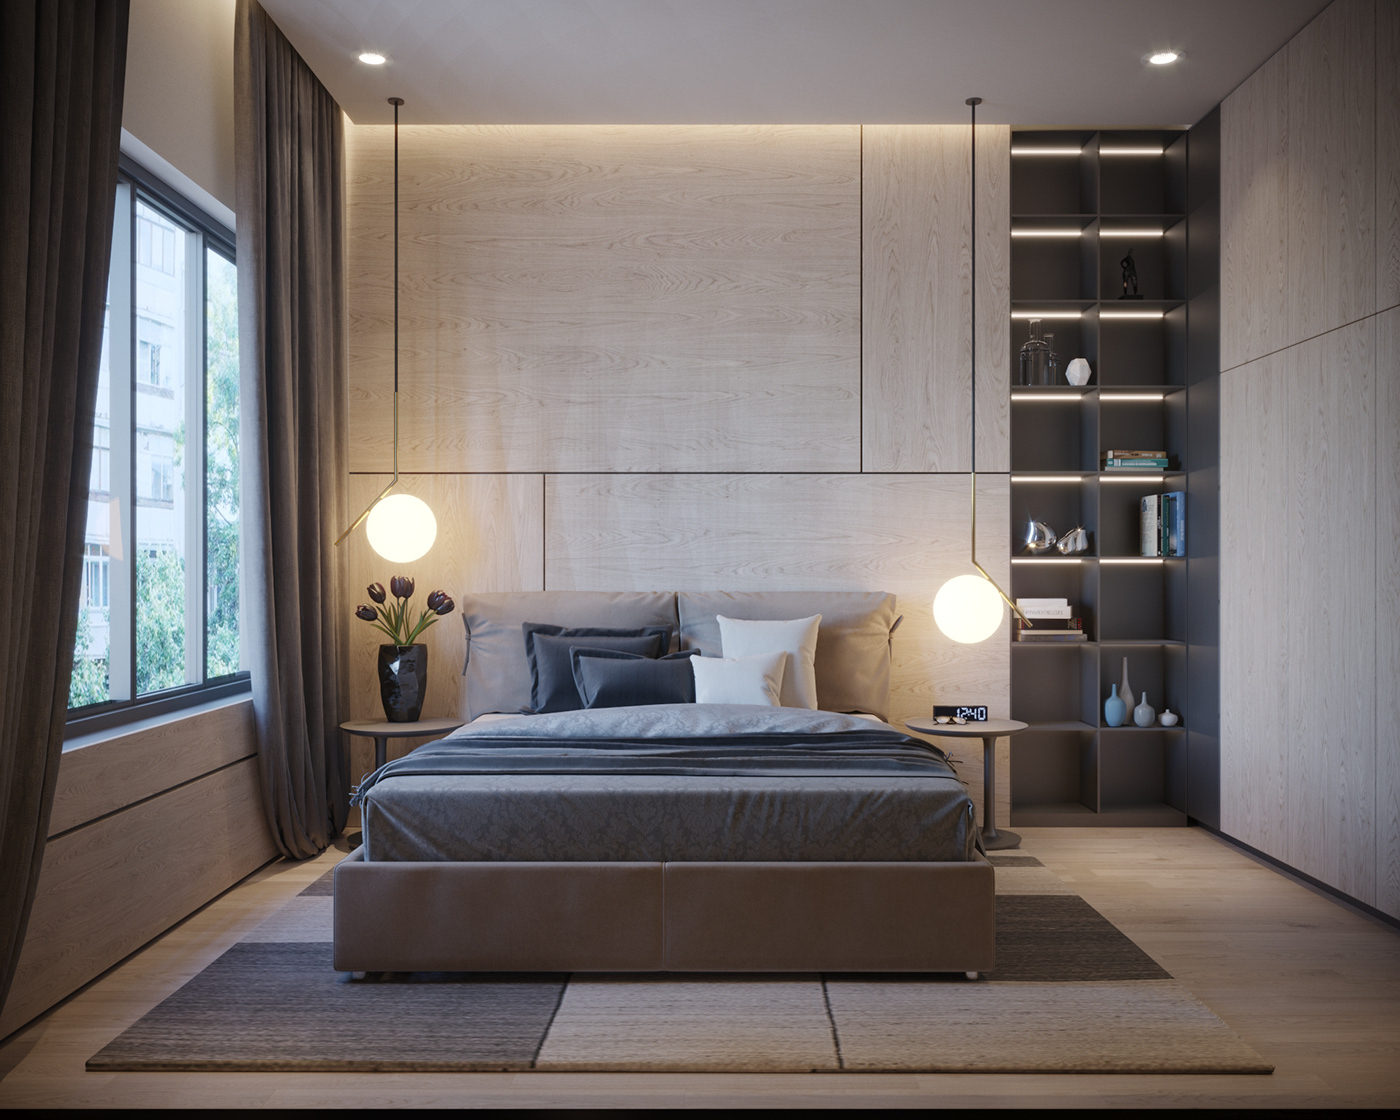 Interior architecture design bedroom